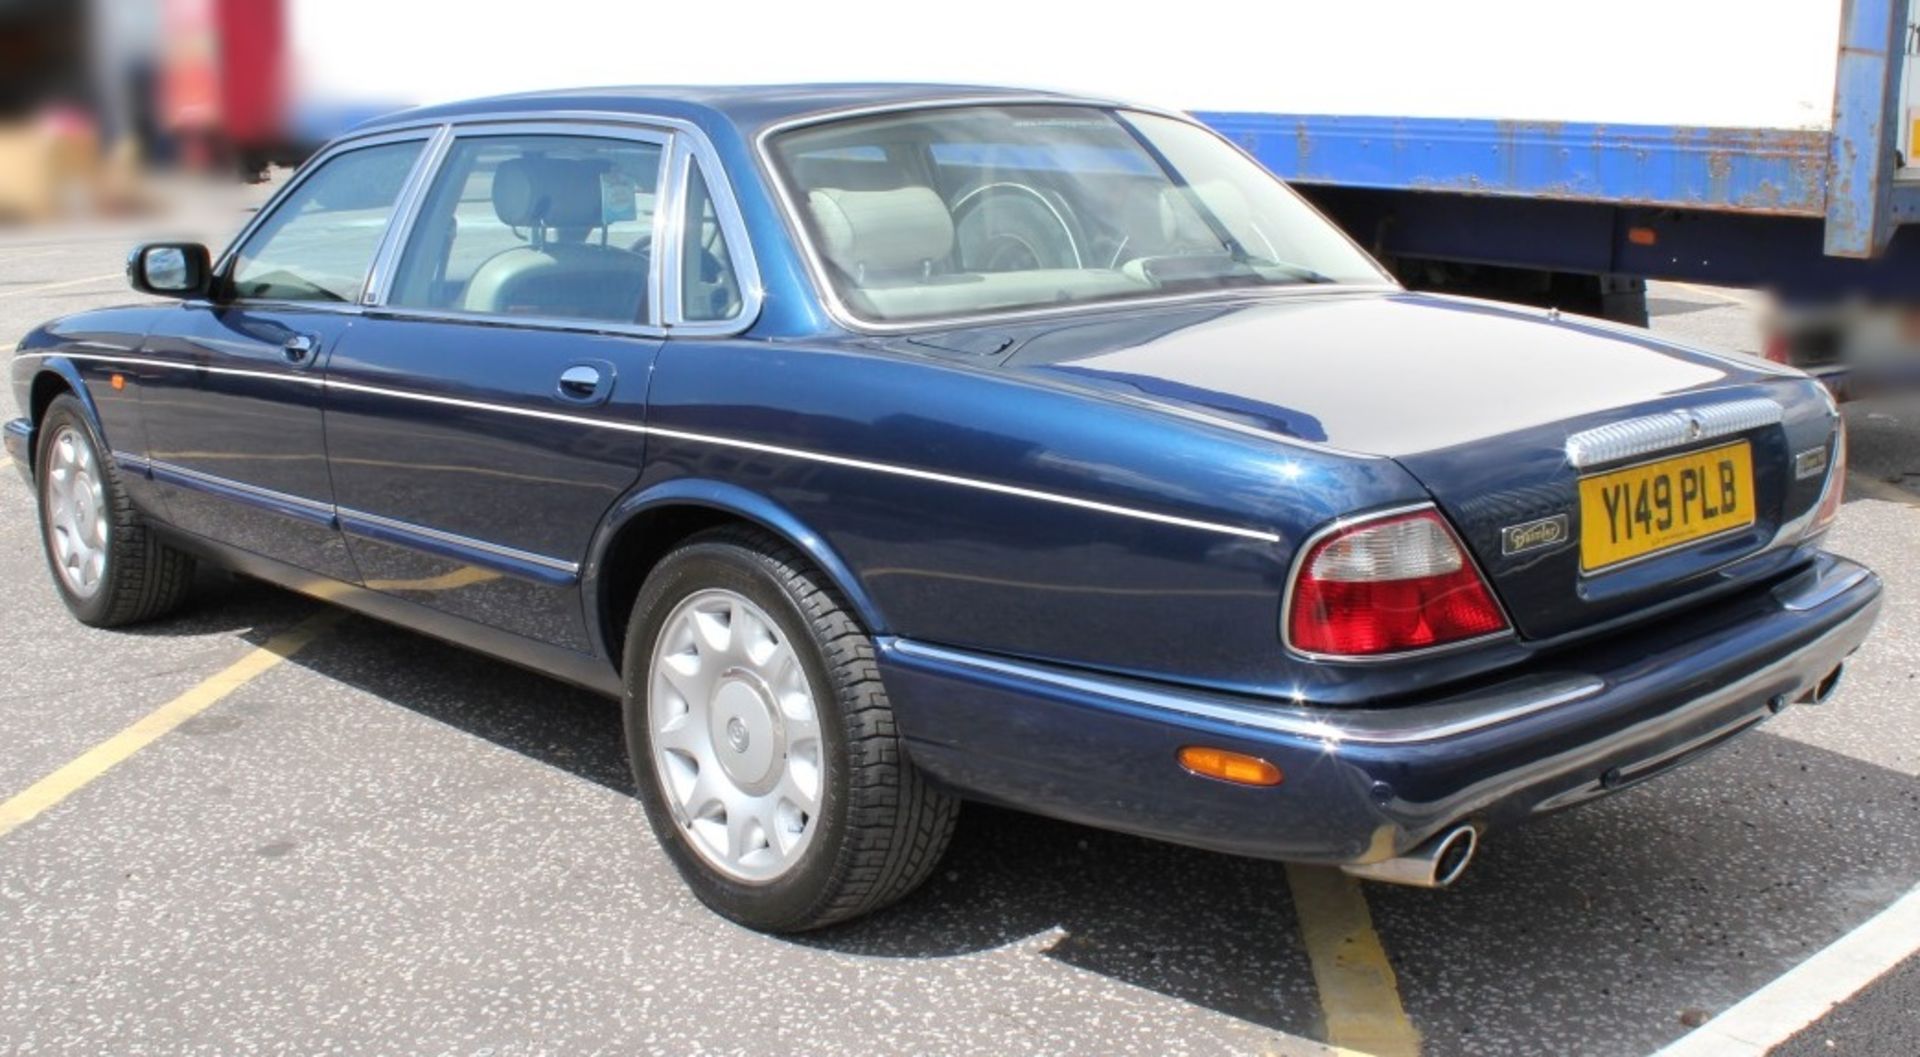 1 x Jaguar Daimler Super V8 Auto 4-Door Saloon - Year 2001 - Blue - Odometer Reading 122,520 - MOT - Image 14 of 77